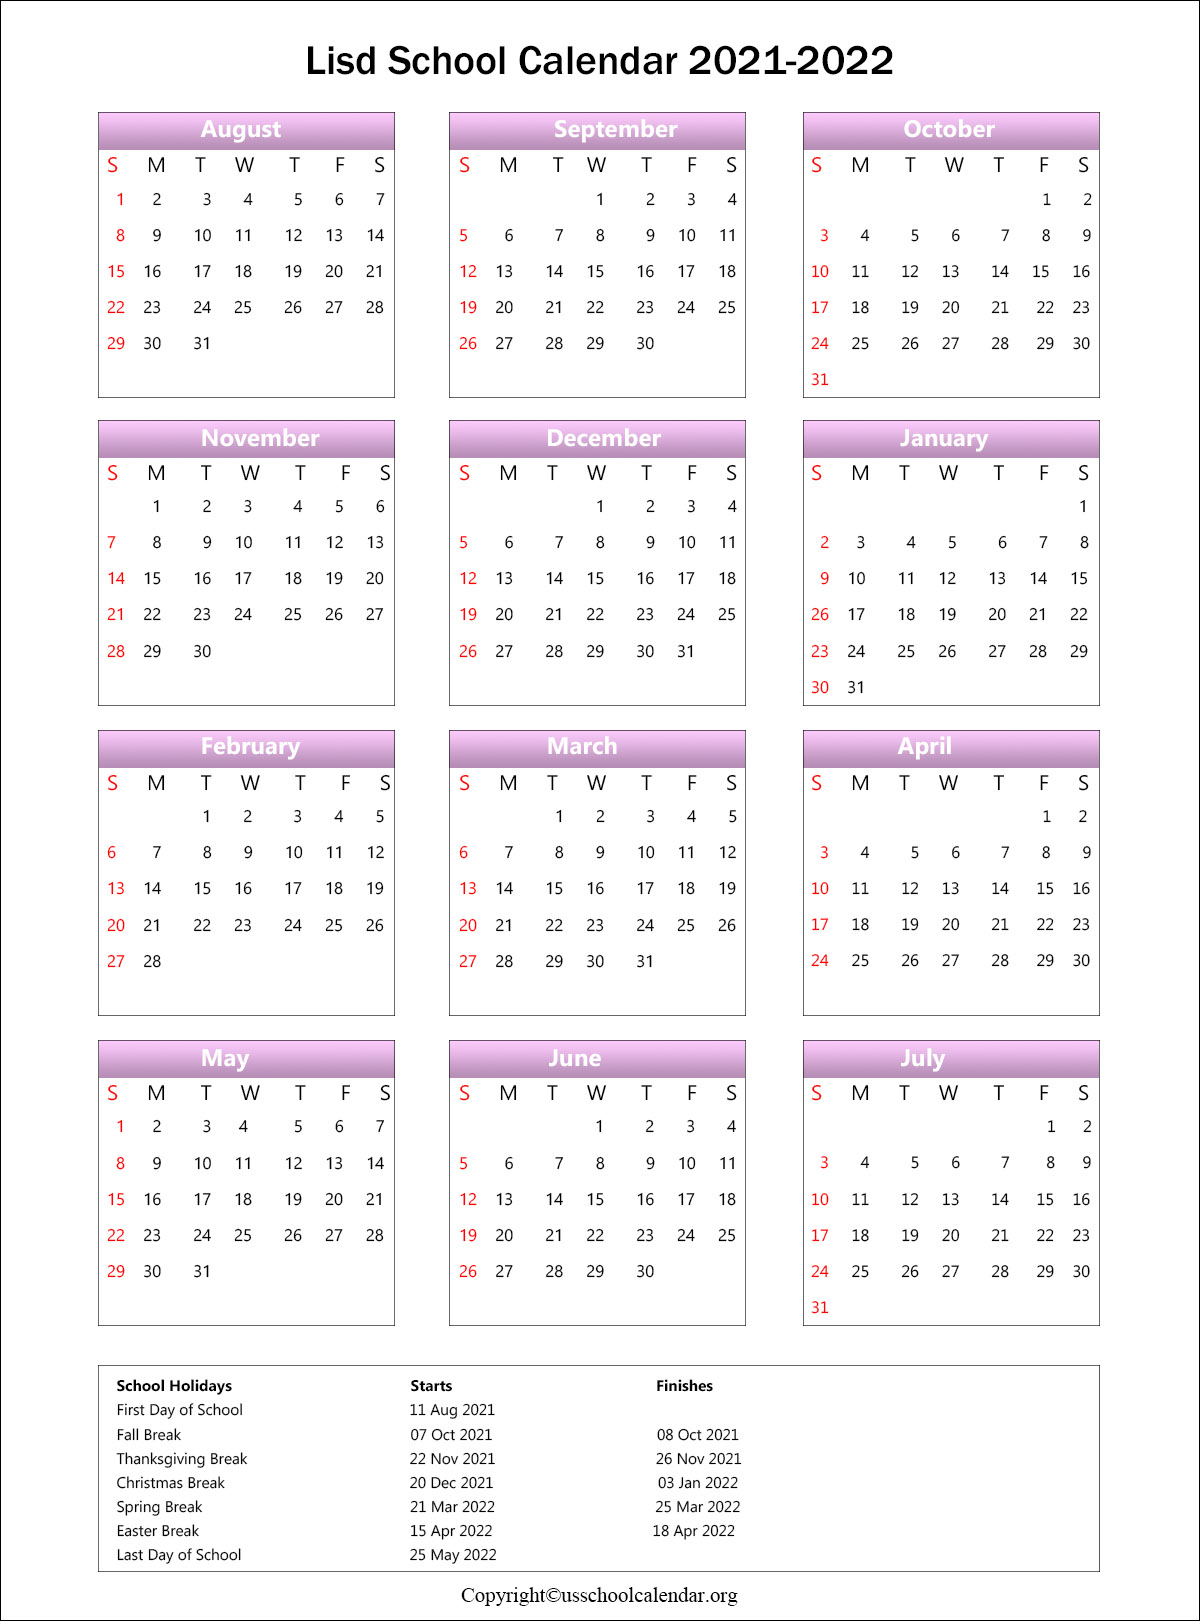 Lisd 2022 Calendar Lisd School Calendar With Holidays 2021-2022 (Lewisville Isd School)